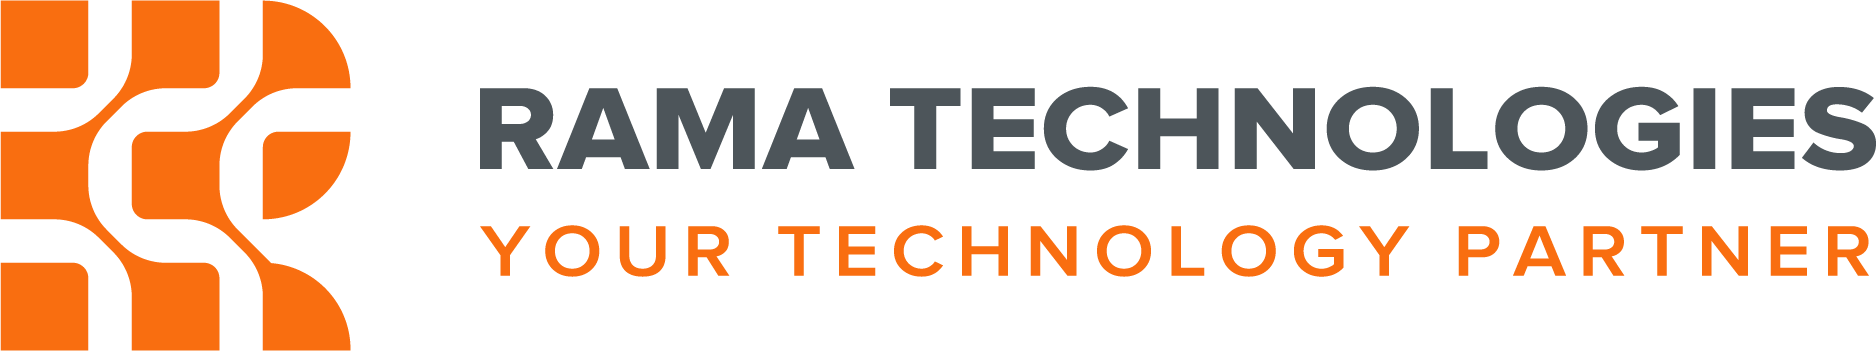 RAMA Technology Logo